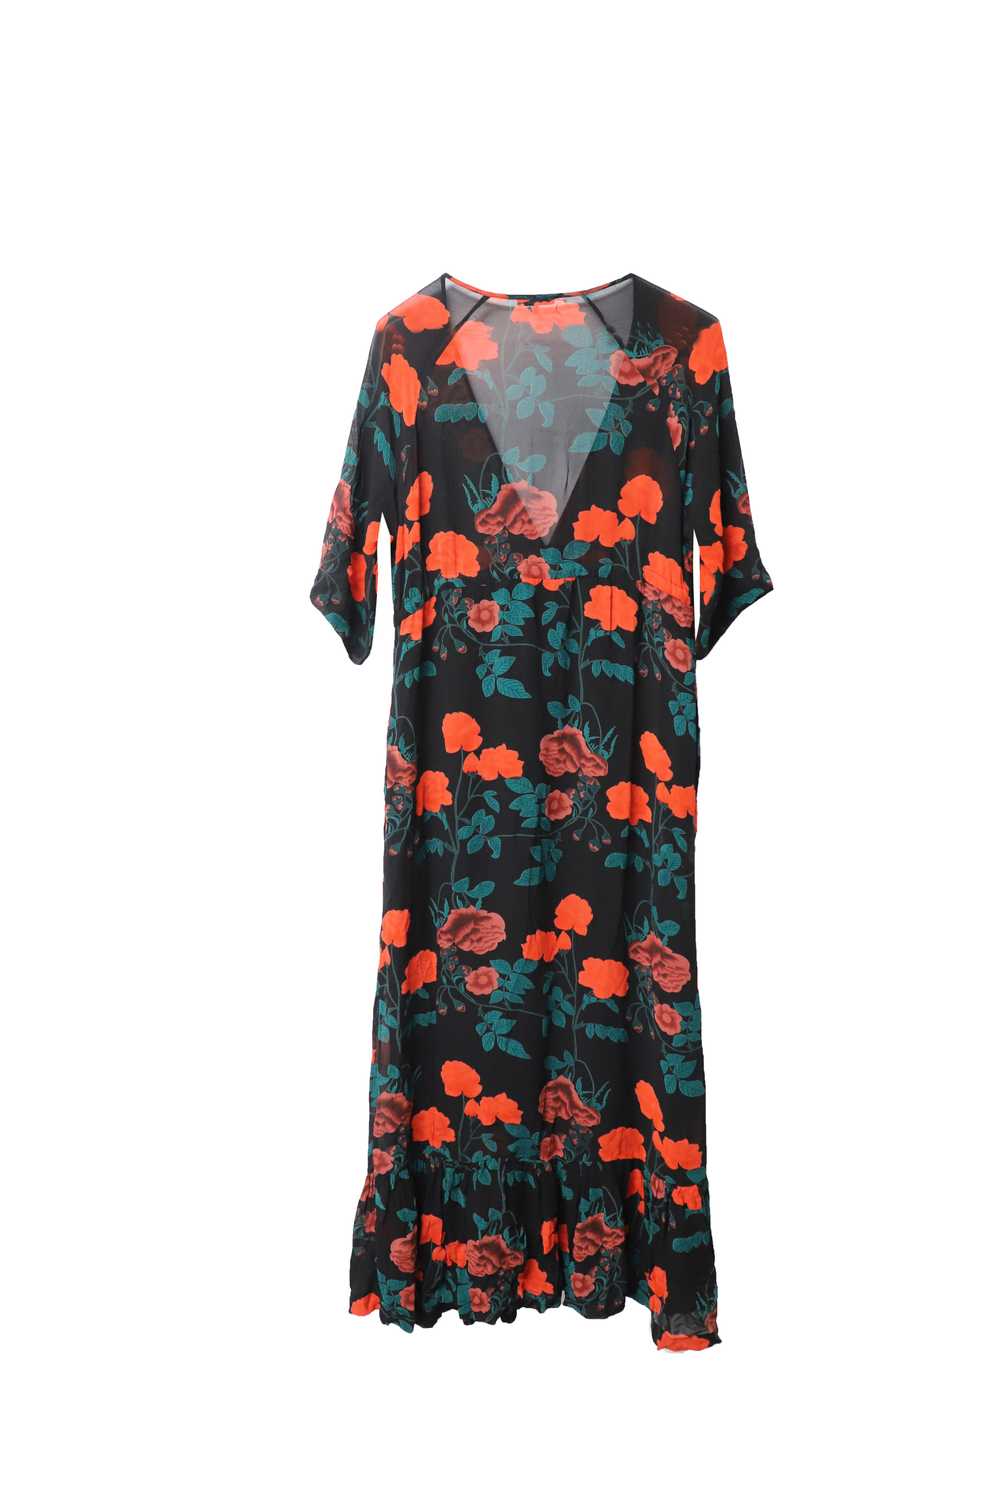 Ganni Black floral print georgette Newman dress - image 4